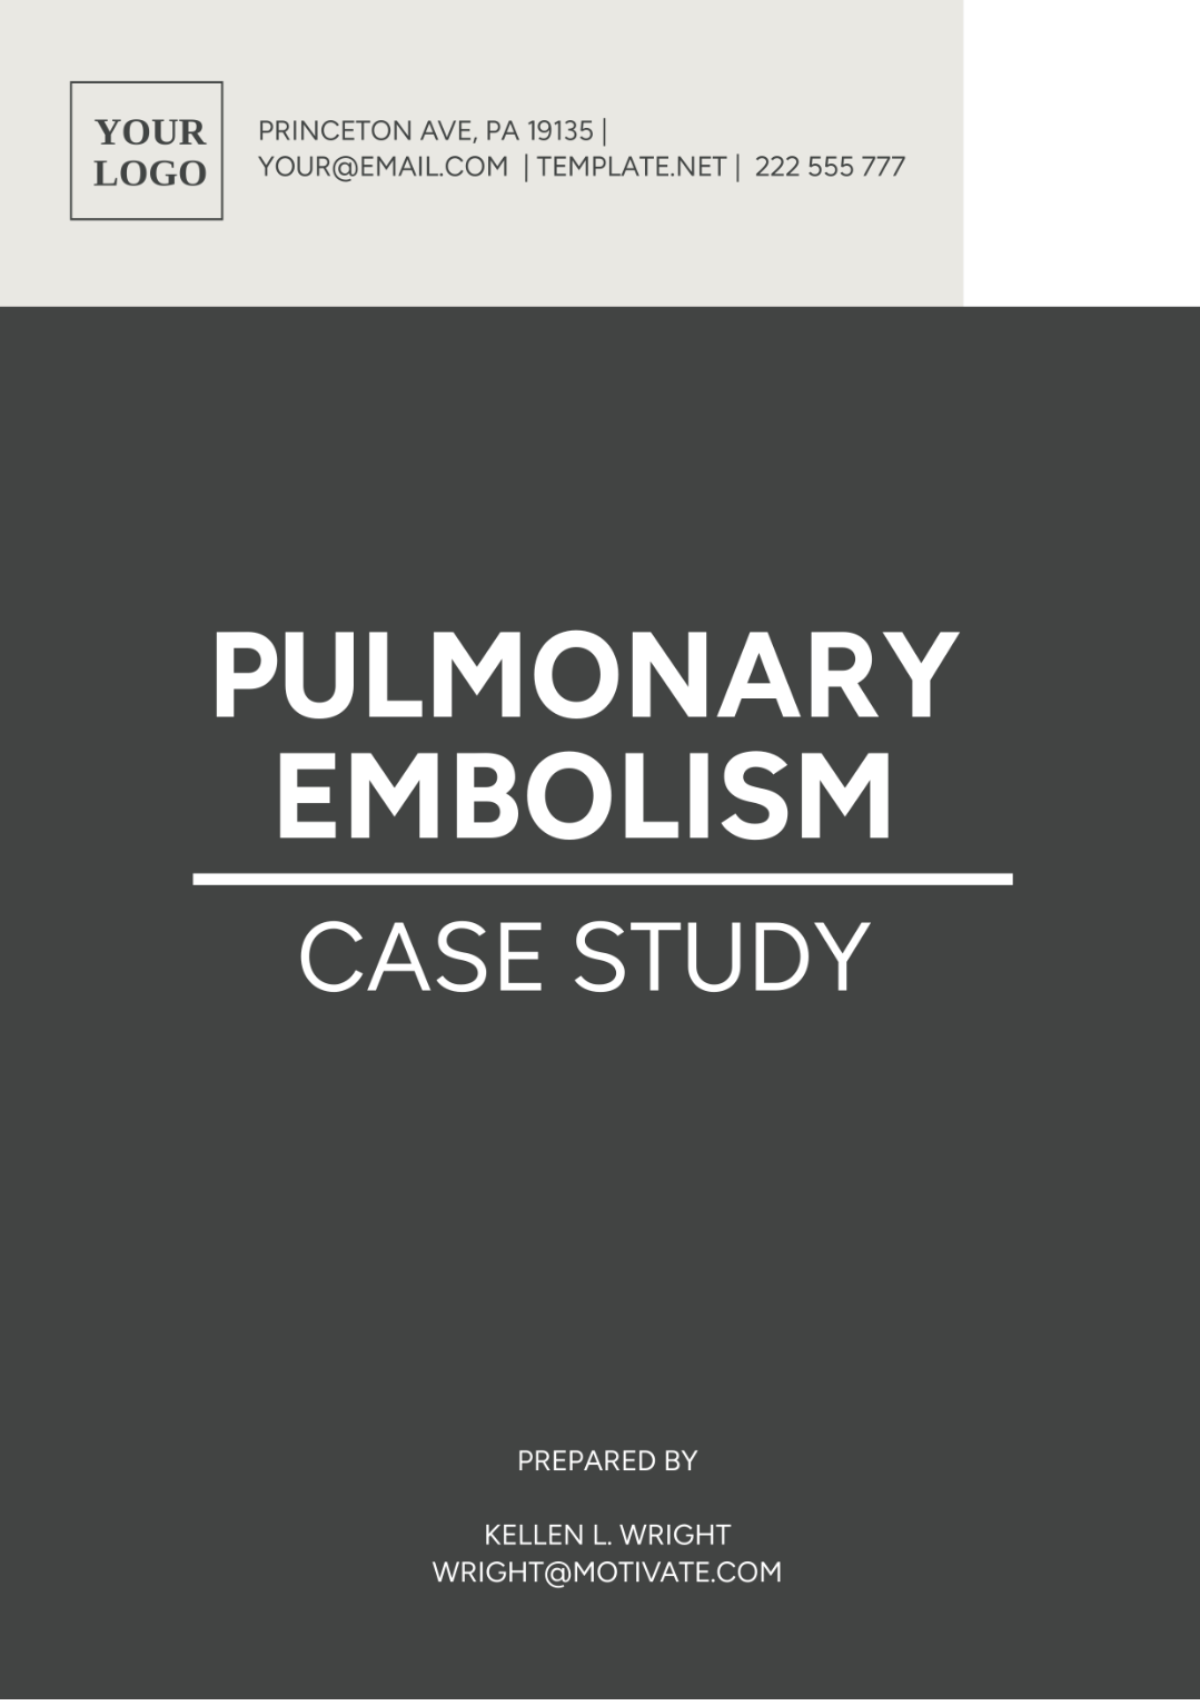 Pulmonary Embolism Case Study Template